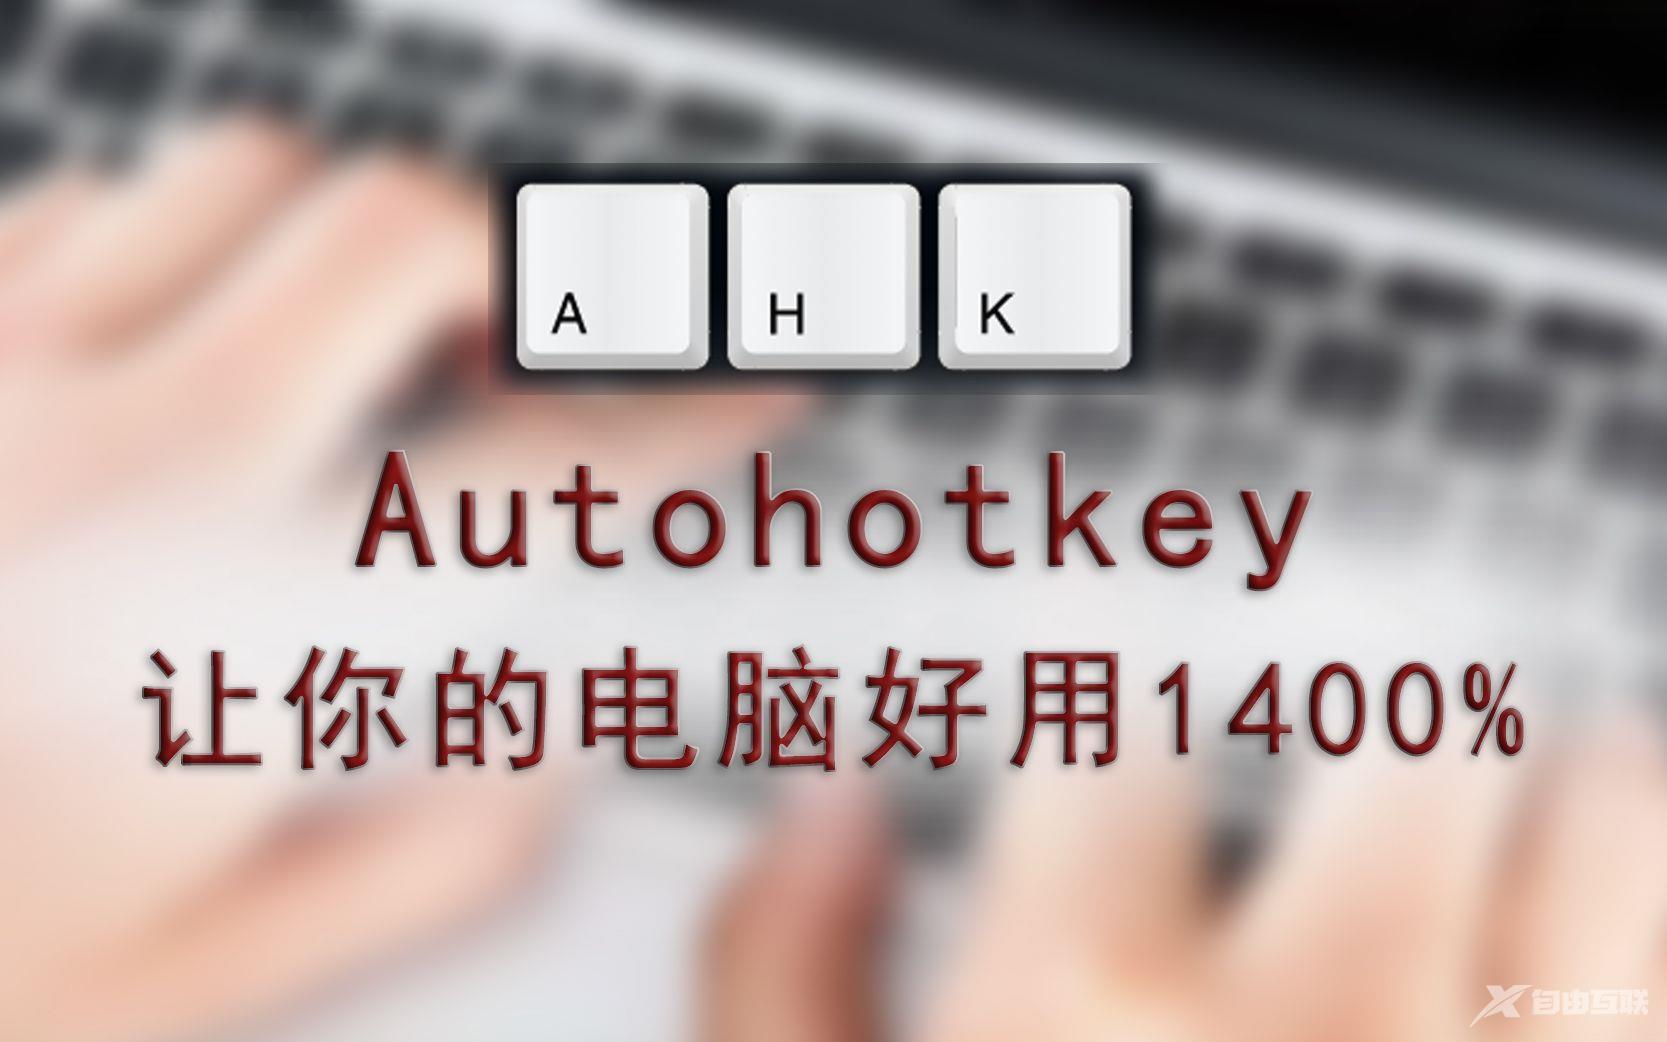 《AutoHotkey》创建脚本教程